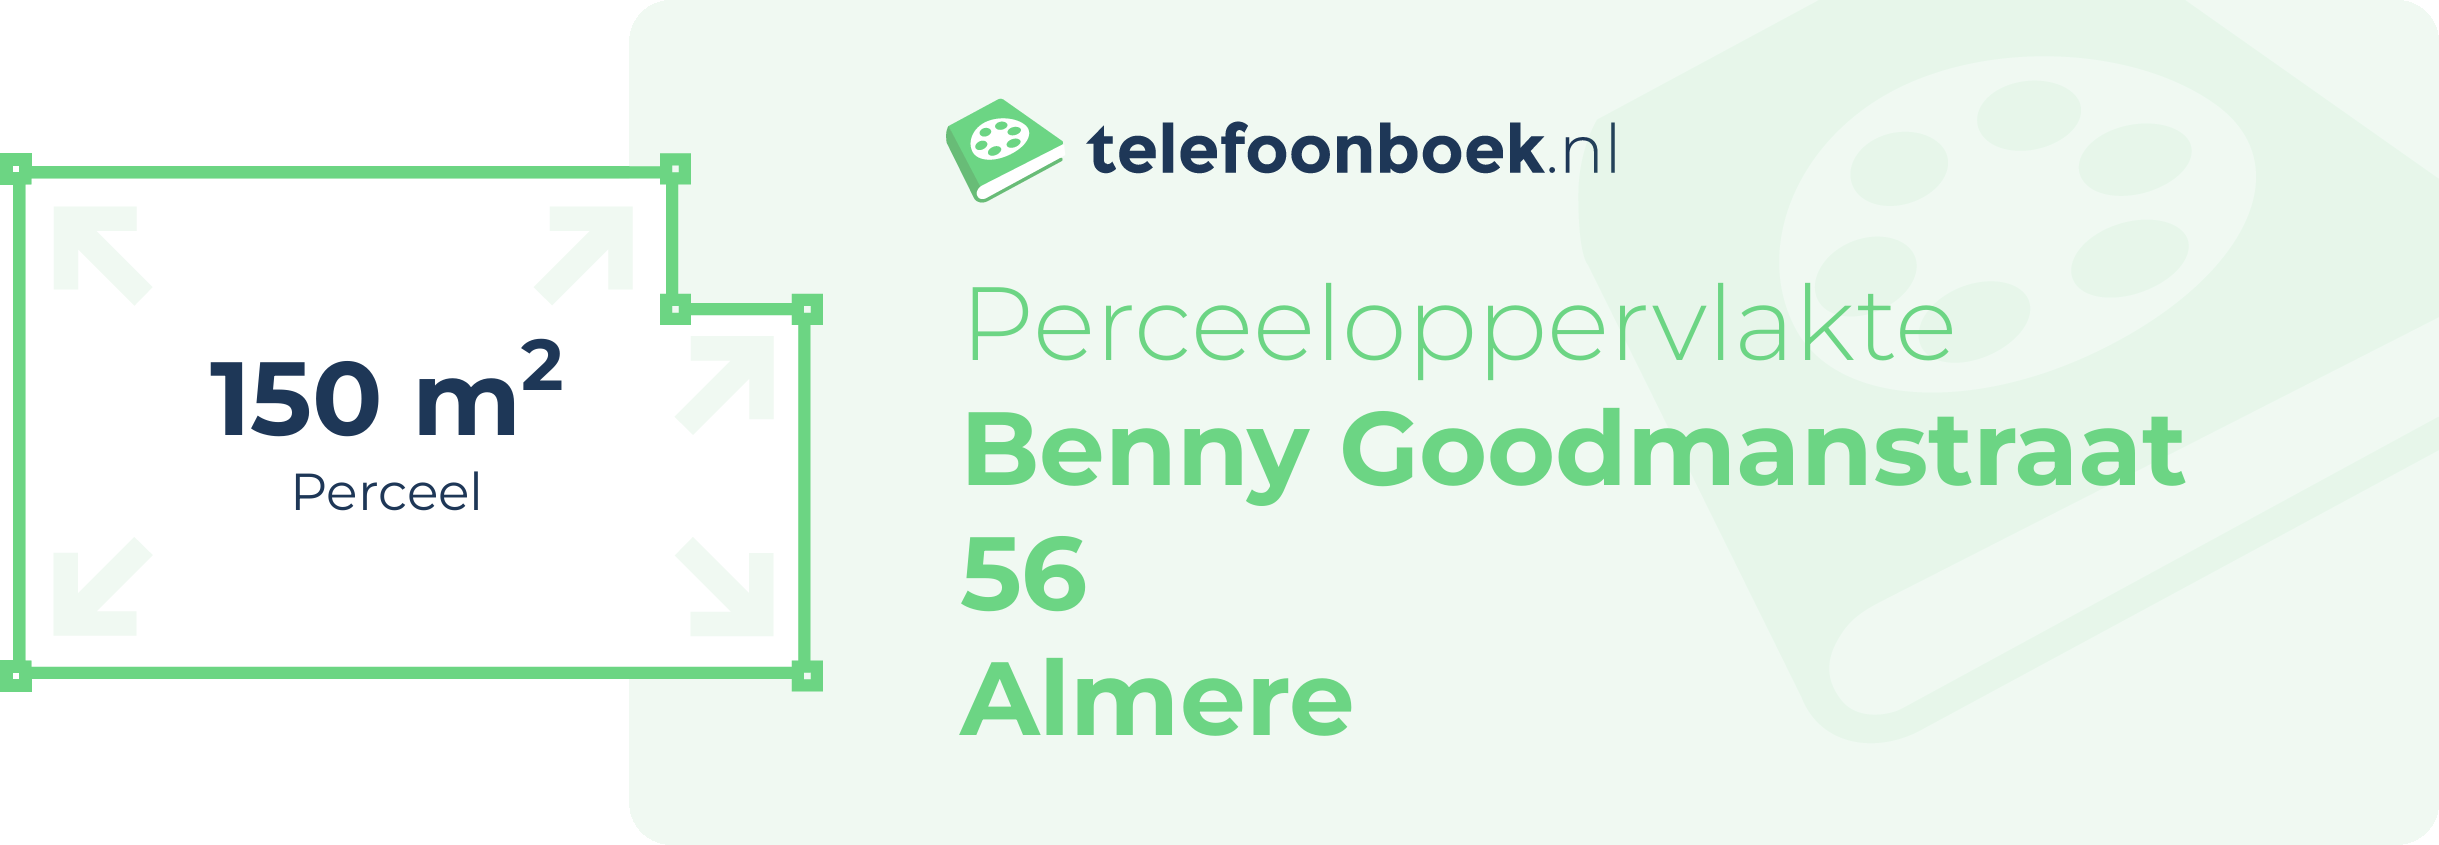 Perceeloppervlakte Benny Goodmanstraat 56 Almere